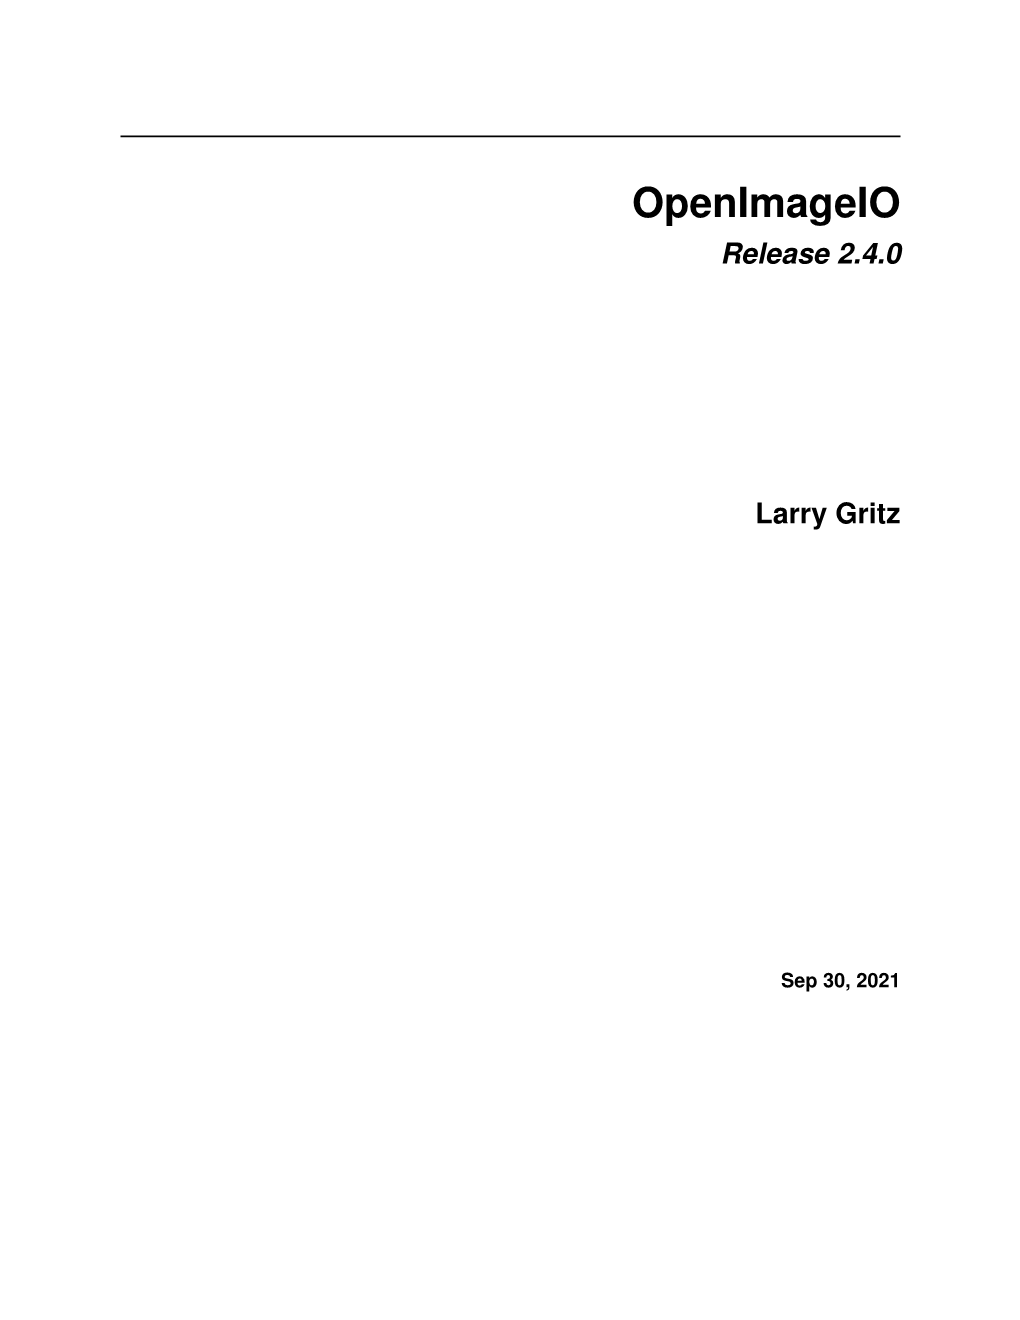 Openimageio Release 2.4.0